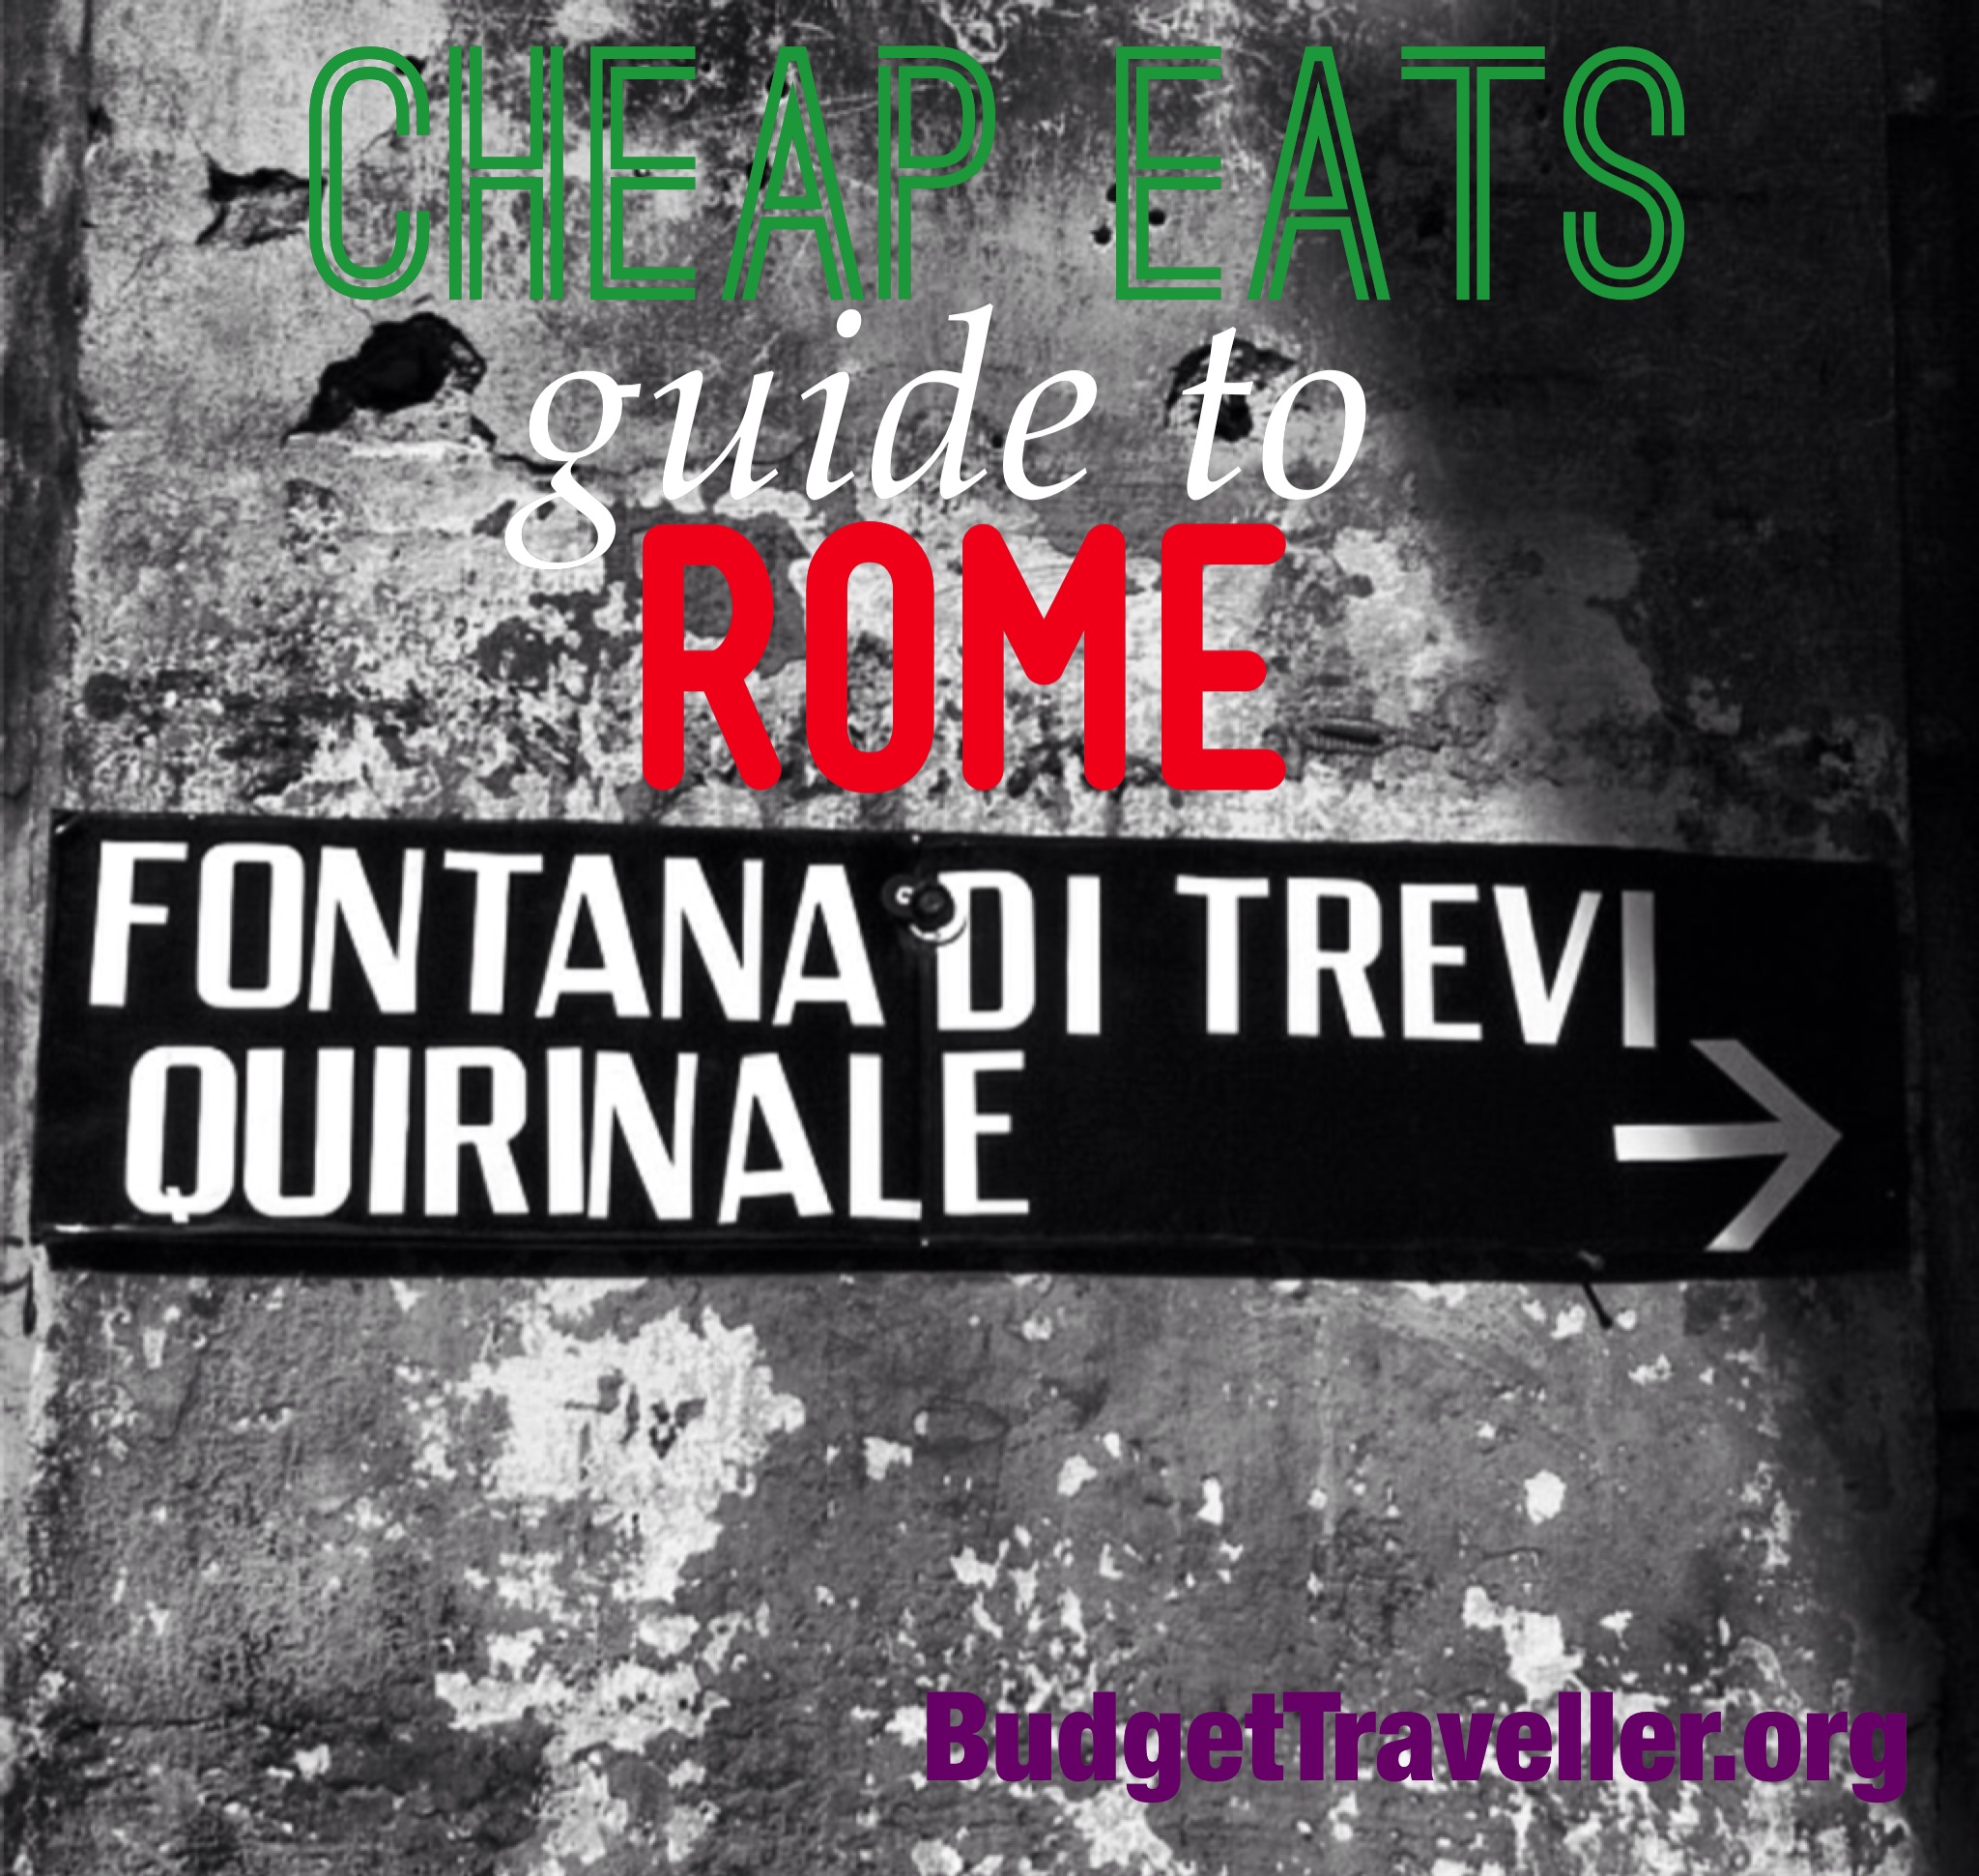 Cheap Eats Guide to Rome